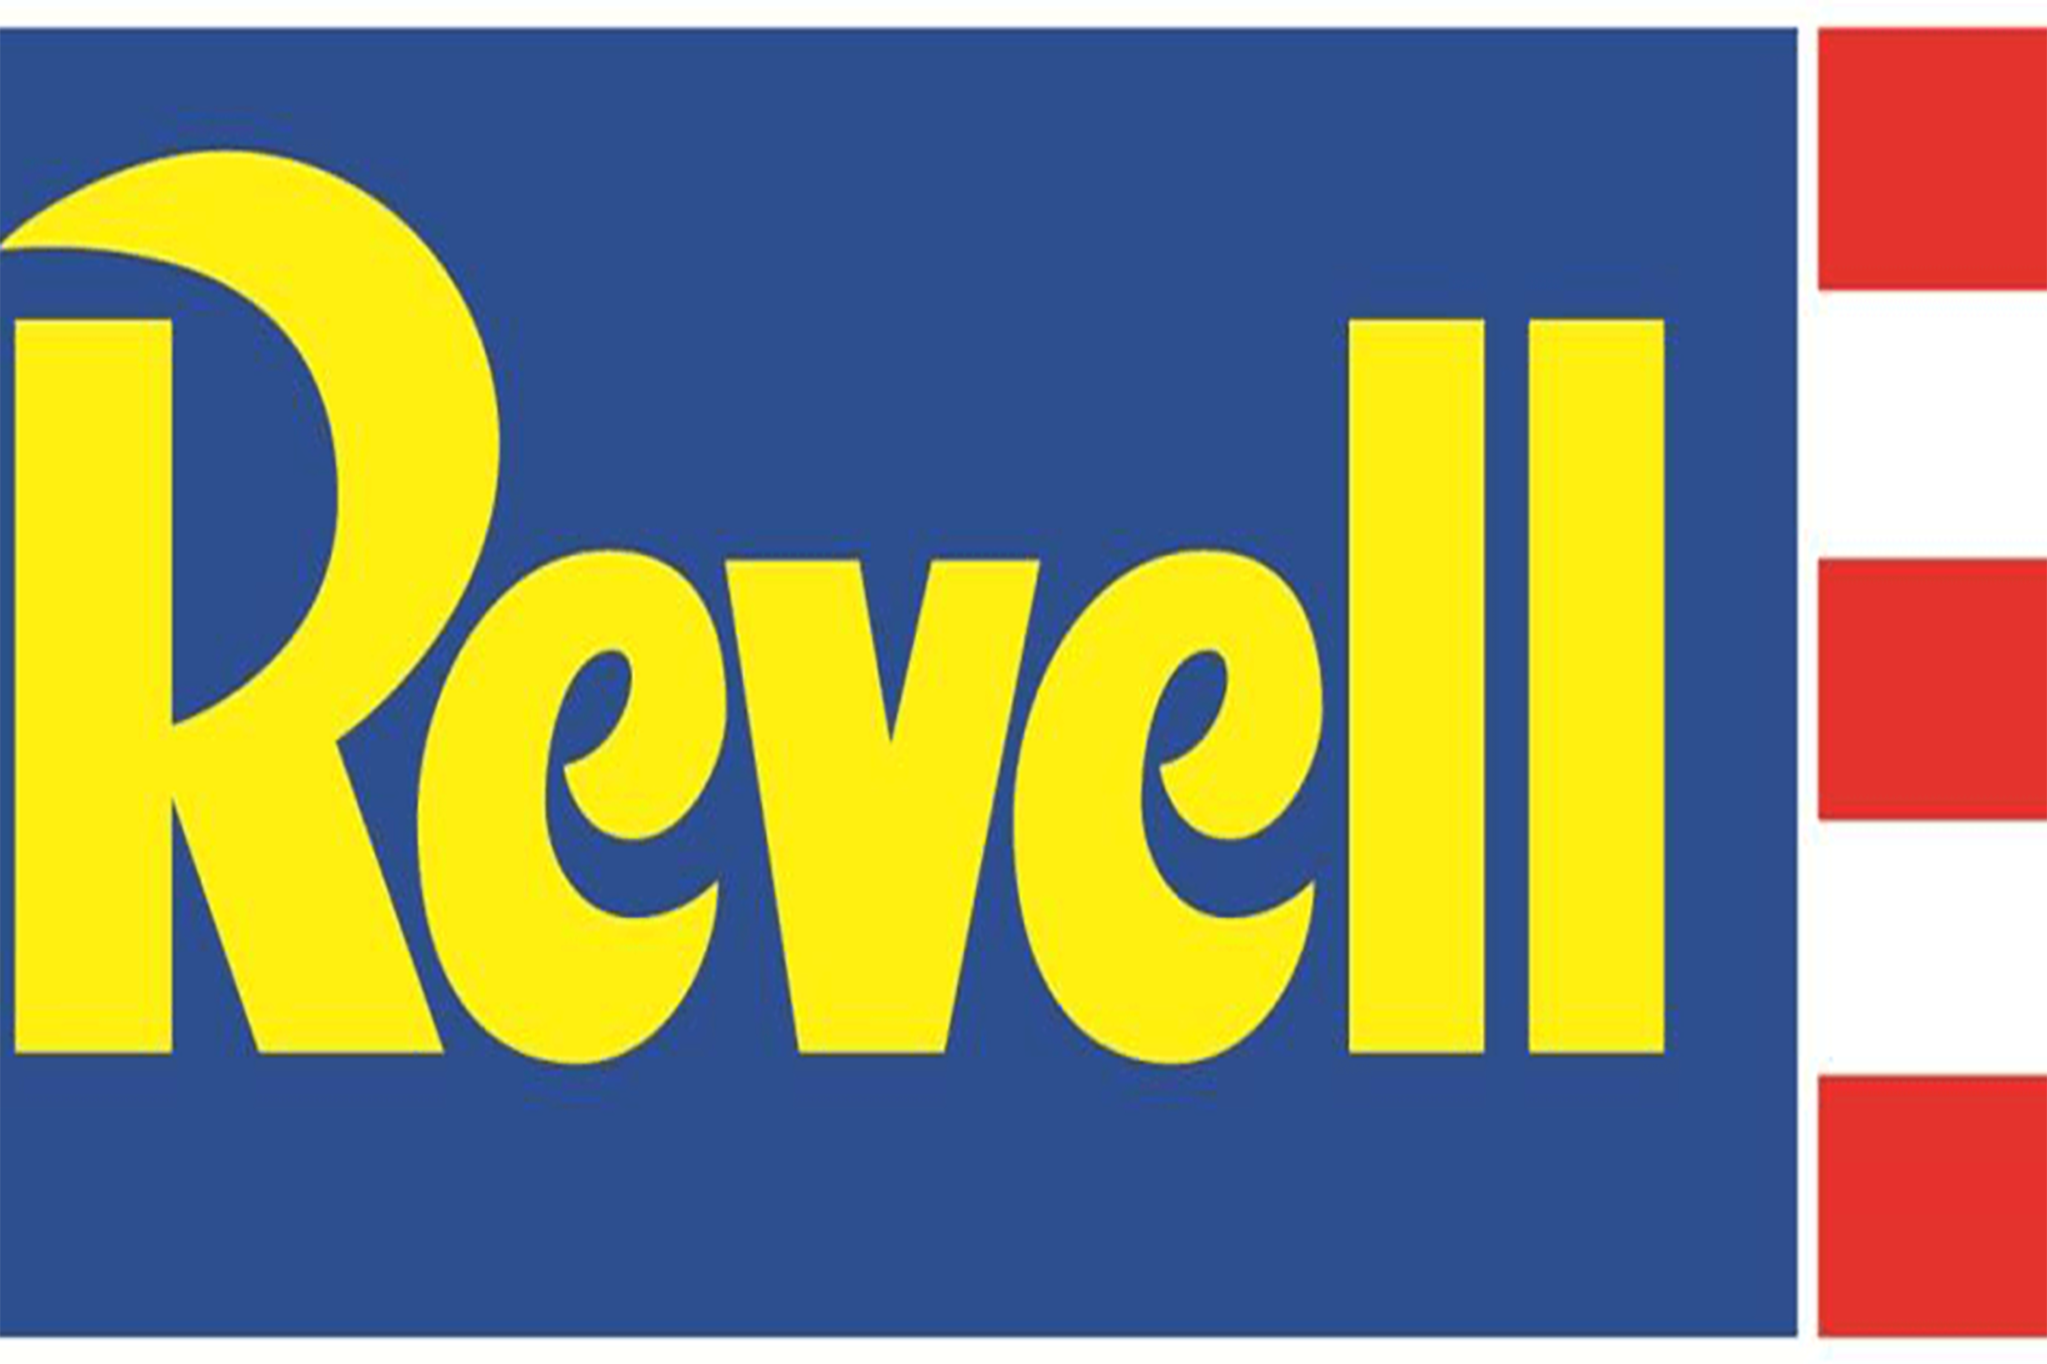 Revell verf modelbouw: acrylverf of enamel verf? Dit moet je weten! Modelbouwverf - Modelbouwverf.nl